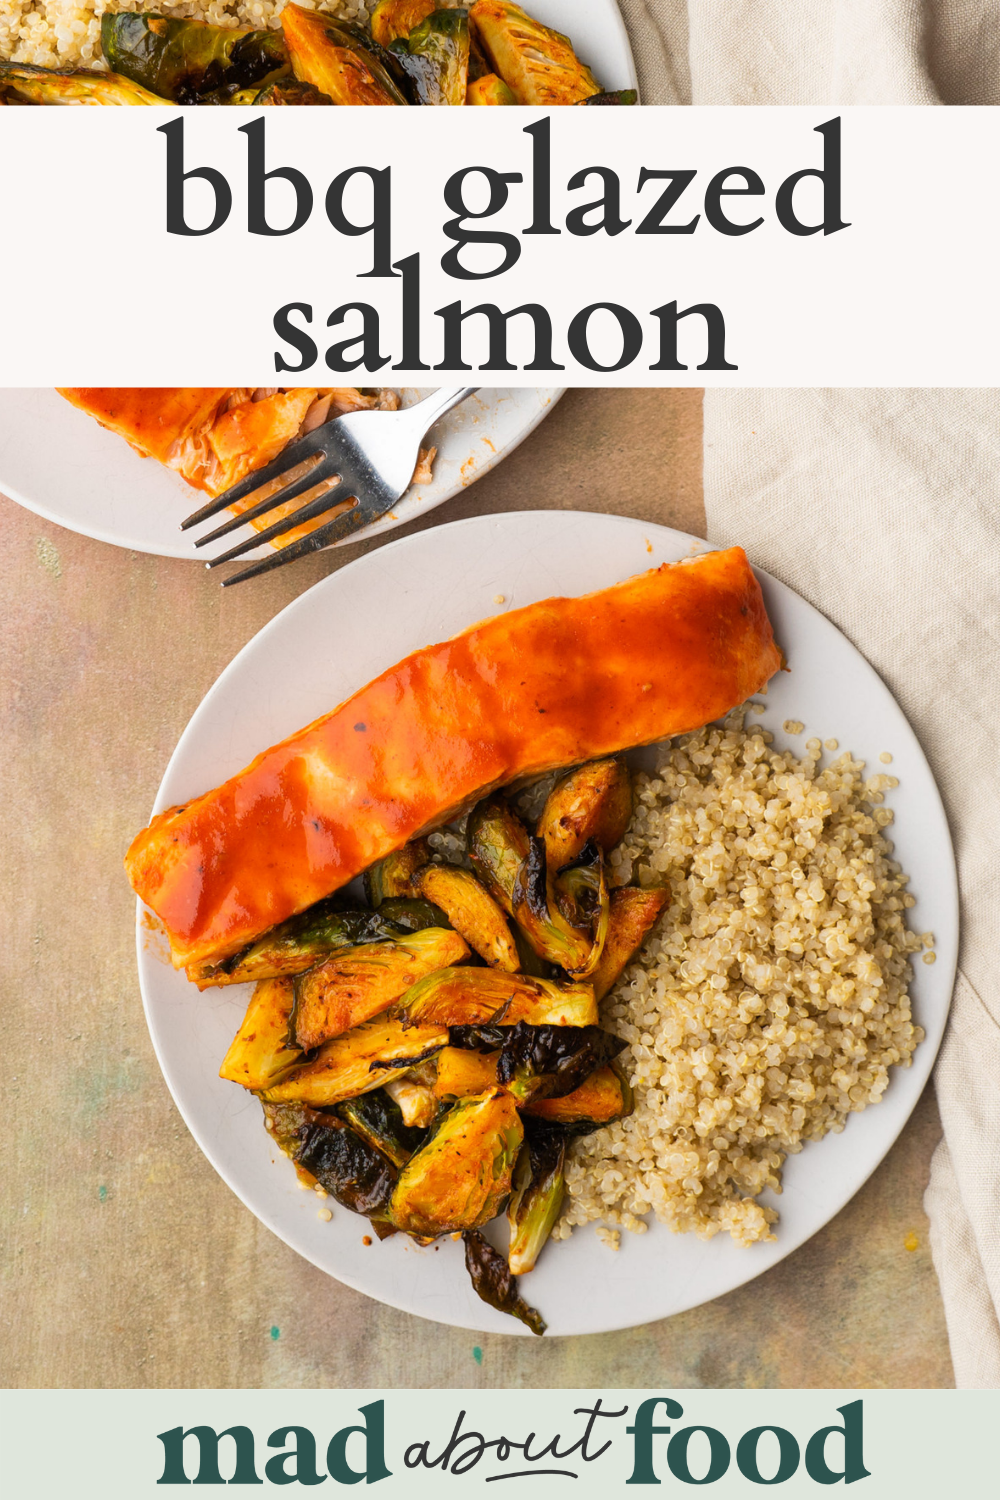 Image for pinning bbq galzed salmon recipe on Pinterest